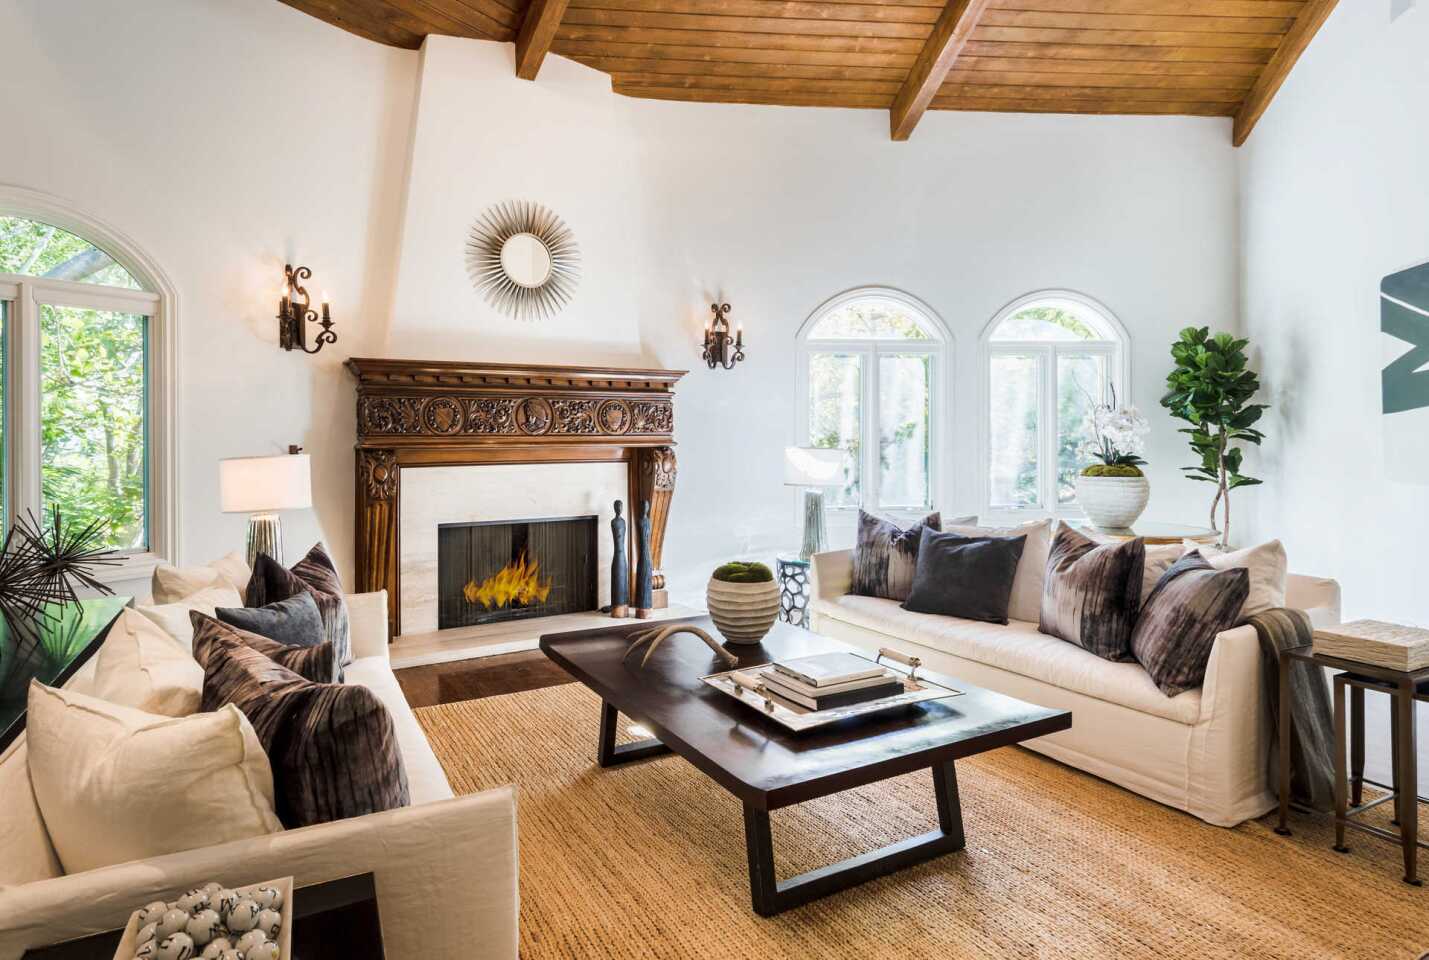 Chris Pratt and Anna Faris' marital home: the living room